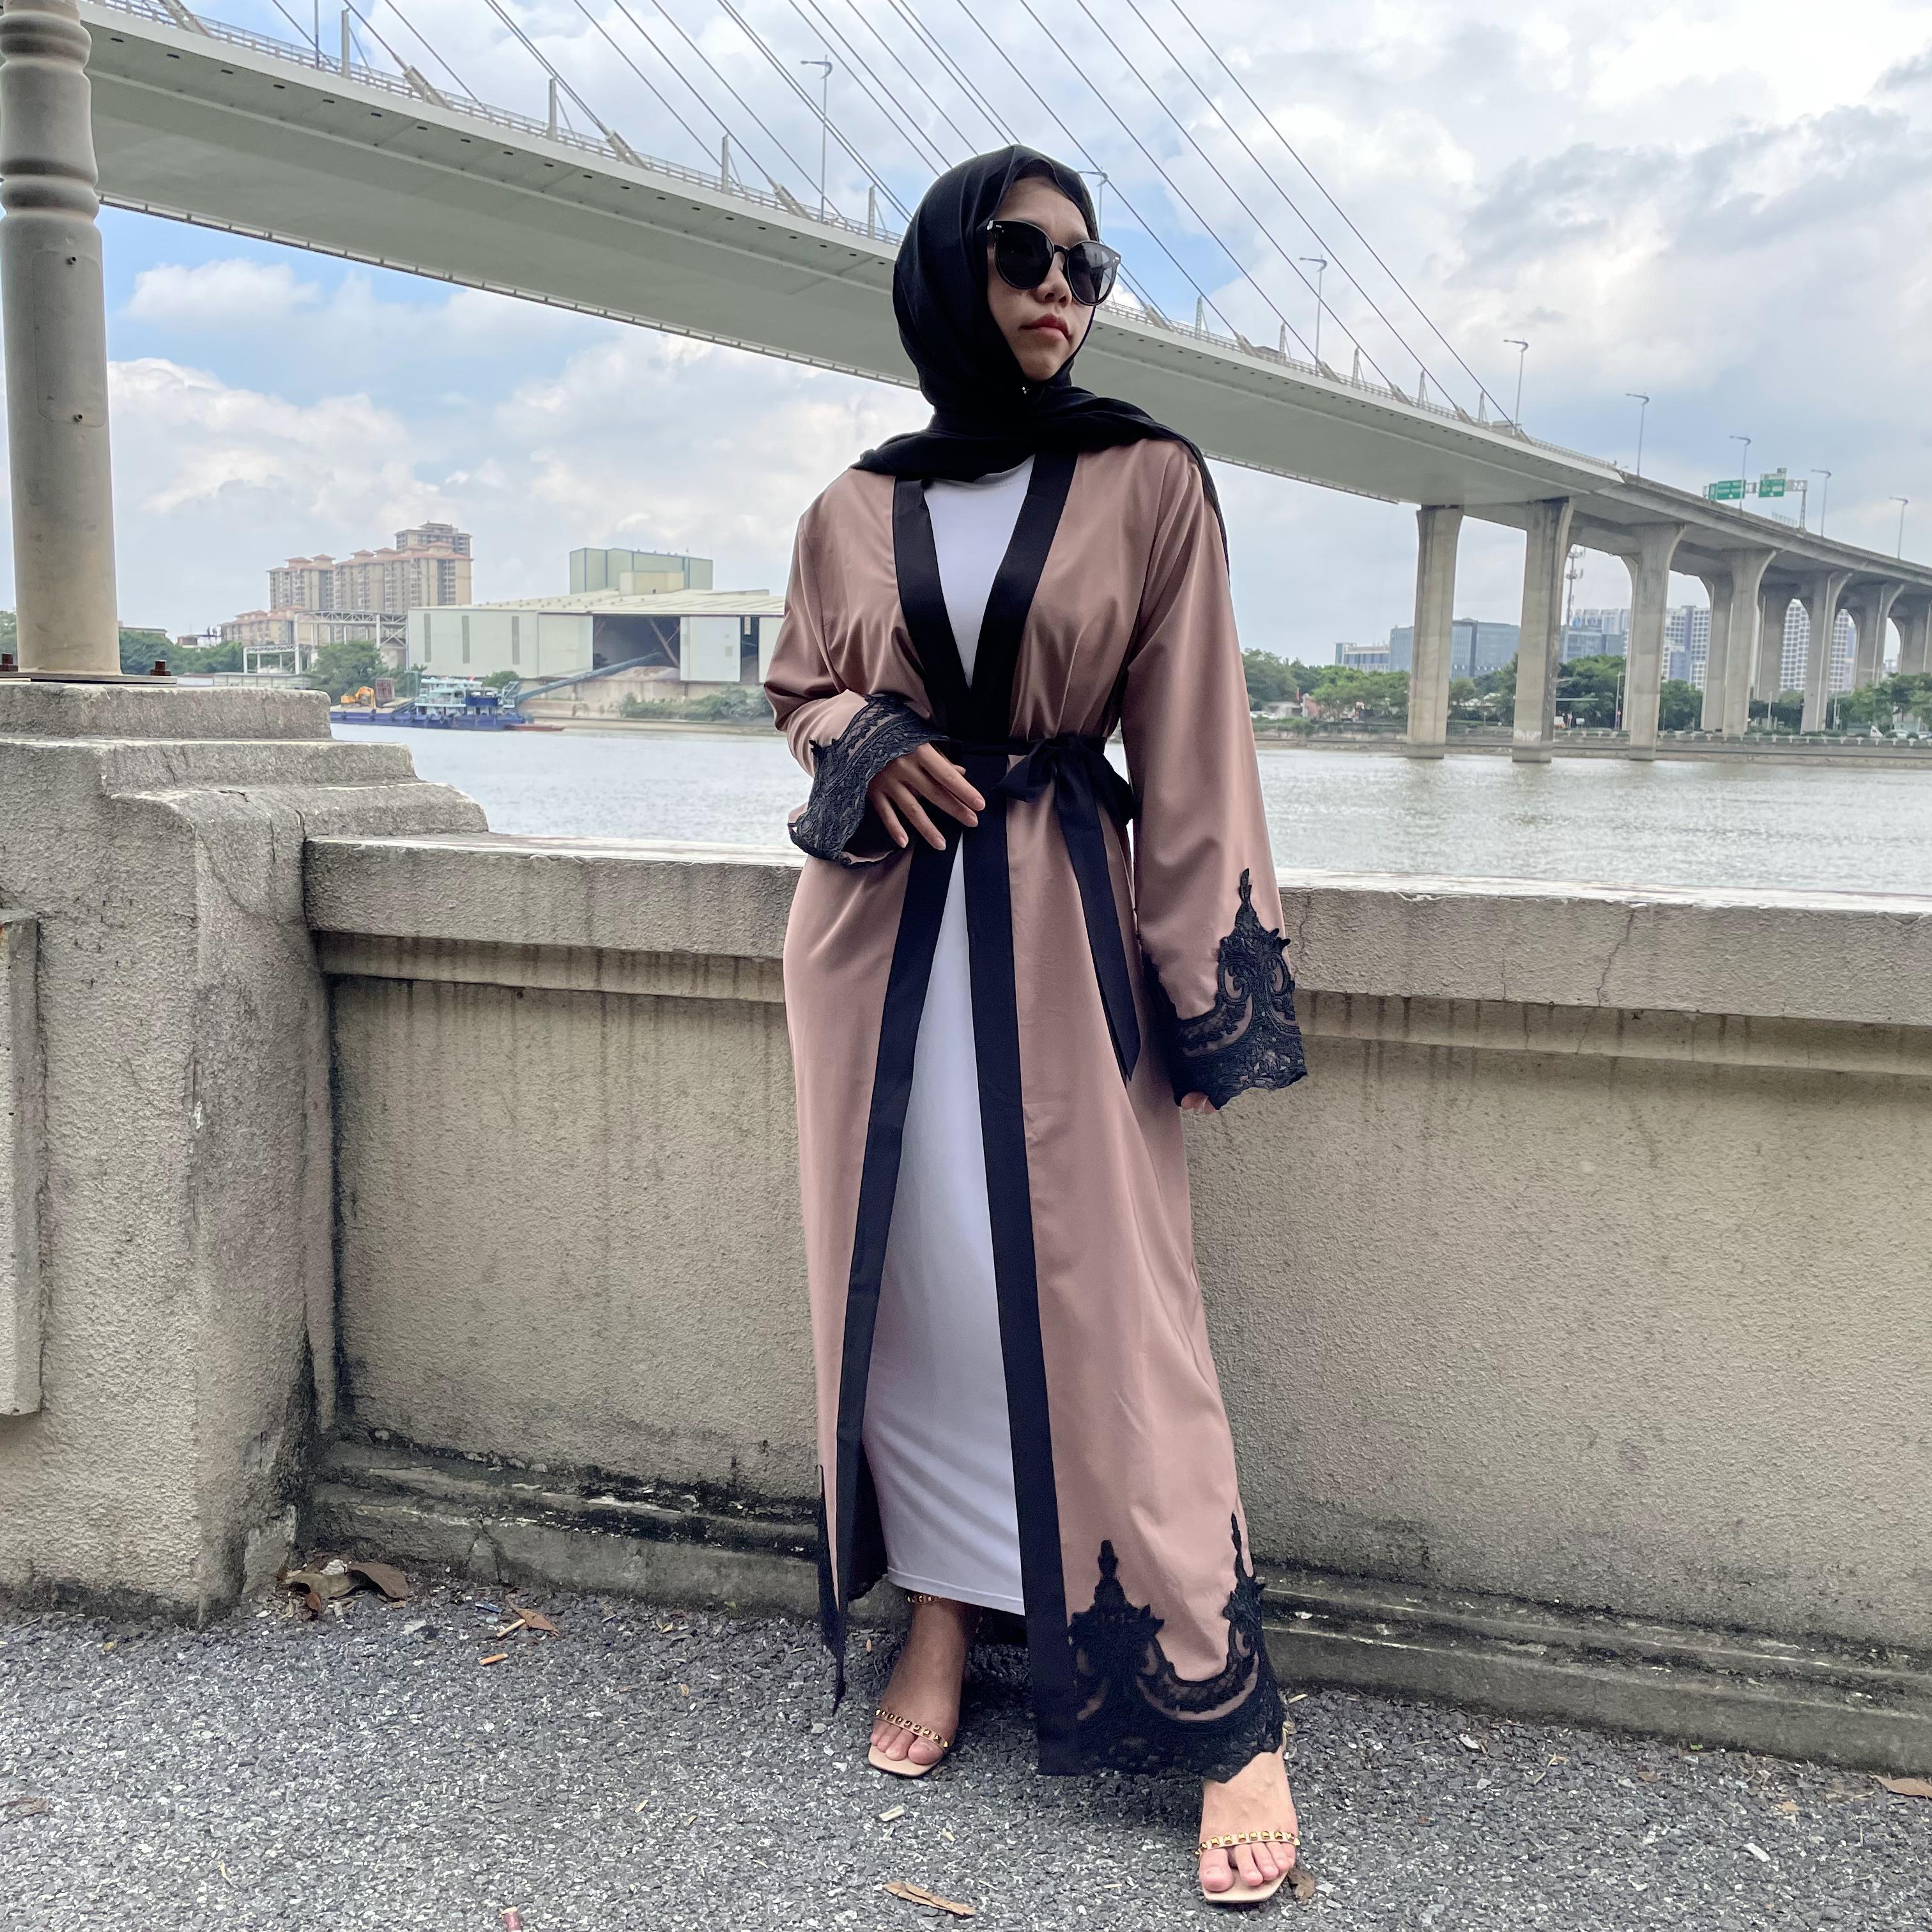 CHAOMENG MUSLIM SHOP1545#New Arrivals Arab Fashion Printed Lantern Sleeve Cardigan Robe Muslim Abaya服饰与配饰CHAOMENGCHAOMENG MUSLIM SHOPCHAOMENG MUSLIM SHOPCHAOMENG MUSLIM SHOP1545#New Arrivals Arab Fashion Printed Lantern Sleeve Cardigan Robe Muslim AbayaFabric content：polyester 95% spandex 5% Size Chart 1 inch = 2.54 cm S: Bust 102 cm,Sleeve 60 cm,Length 133 cm M: Bust 107 cm,Sleeve 60 cm,Length 138 cm L: Bust 112 cm,Sleeve 60 cm,Length 143 cm XL: Bust 117cm,Sleeve 60 cm,Length 148 cm 2XL: Bust 122 cm,Sleeve 60 cm,Length 153 cm Model Show Fabric content：polyester 95% spandex 5%  服饰与配饰1545#New Arrivals Arab Fashion Printed Lantern Sleeve Cardigan Robe Muslim Abaya - CHAOMENG MUSLIM SHOPFabric content：polyester 95% spandex 5% Size Chart 1 inch = 2.54 cm S: Bust 102 cm,Sleeve 60 cm,Length 133 cm M: Bust 107 cm,Sleeve 60 cm,Length 138 cm L: Bust 112 cm,Sleeve 60 cm,Length 143 cm XL: Bust 117cm,Sleeve 60 cm,Length 148 cm 2XL: Bust 122 cm,Sleeve 60 cm,Length 153 cm Model Show Fabric content：polyester 95% spandex 5%   - CHAOMENG MUSLIM SHOPFabric content：polyester 95% spandex 5% Size Chart 1 inch = 2.54 cm S: Bust 102 cm,Sleeve 60 cm,Length 133 cm M: Bust 107 cm,Sleeve 60 cm,Length 138 cm L: Bust 112 cm,Sleeve 60 cm,Length 143 cm XL: Bust 117cm,Sleeve 60 cm,Length 148 cm 2XL: Bust 122 cm,Sleeve 60 cm,Length 153 cm Model Show Fabric content：polyester 95% spandex 5%   - CHAOMENG MUSLIM SHOP1545#New Arrivals Arab Fashion Printed Lantern Sleeve Cardigan Robe Muslim AbayaFabric content：polyester 95% spandex 5% Size Chart 1 inch = 2.54 cm S: Bust 102 cm,Sleeve 60 cm,Length 133 cm M: Bust 107 cm,Sleeve 60 cm,Length 138 cm L: Bust 112 cm,Sleeve 60 cm,Length 143 cm XL: Bust 117cm,Sleeve 60 cm,Length 148 cm 2XL: Bust 122 cm,Sleeve 60 cm,Length 153 cm Model Show Fabric content：polyester 95% spandex 5%  服饰与配饰26.9CHAOMENGCHAOMENG MUSLIM SHOP1545#New Arrivals Arab Fashion Printed Lantern Sleeve Cardigan Robe Muslim AbayaFabric content：polyester 95% spandex 5% Size Chart 1 inch = 2.54 cm S: Bust 102 cm,Sleeve 60 cm,Length 133 cm M: Bust 107 cm,Sleeve 60 cm,Length 138 cm L: Bust 112 cm,Sleeve 60 cm,Length 143 cm XL: Bust 117cm,Sleeve 60 cm,Length 148 cm 2XL: Bust 122 cm,Sleeve 60 cm,Length 153 cm Model Show Fabric content：polyester 95% spandex 5%  服饰与配饰26.9CHAOMENGCHAOMENG MUSLIM SHOP1545#New Arrivals Arab Fashion Printed Lantern Sleeve Cardigan Robe Muslim AbayaFabric content：polyester 95% spandex 5% Size Chart 1 inch = 2.54 cm S: Bust 102 cm,Sleeve 60 cm,Length 133 cm M: Bust 107 cm,Sleeve 60 cm,Length 138 cm L: Bust 112 cm,Sleeve 60 cm,Length 143 cm XL: Bust 117cm,Sleeve 60 cm,Length 148 cm 2XL: Bust 122 cm,Sleeve 60 cm,Length 153 cm Model Show Fabric content：polyester 95% spandex 5%  服饰与配饰1545#New Arrivals Arab Fashion Printed Lantern Sleeve Cardigan Robe Muslim Abaya - CHAOMENG MUSLIM SHOPFabric content：polyester 95% spandex 5% Size Chart 1 inch = 2.54 cm S: Bust 102 cm,Sleeve 60 cm,Length 133 cm M: Bust 107 cm,Sleeve 60 cm,Length 138 cm L: Bust 112 cm,Sleeve 60 cm,Length 143 cm XL: Bust 117cm,Sleeve 60 cm,Length 148 cm 2XL: Bust 122 cm,Sleeve 60 cm,Length 153 cm Model Show Fabric content：polyester 95% spandex 5%   - CHAOMENG MUSLIM SHOPFabric content：polyester 95% spandex 5% Size Chart 1 inch = 2.54 cm S: Bust 102 cm,Sleeve 60 cm,Length 133 cm M: Bust 107 cm,Sleeve 60 cm,Length 138 cm L: Bust 112 cm,Sleeve 60 cm,Length 143 cm XL: Bust 117cm,Sleeve 60 cm,Length 148 cm 2XL: Bust 122 cm,Sleeve 60 cm,Length 153 cm Model Show Fabric content：polyester 95% spandex 5%   - CHAOMENG MUSLIM SHOP1545#New Arrivals Arab Fashion Printed Lantern Sleeve Cardigan Robe Muslim AbayaFabric content：polyester 95% spandex 5% Size Chart 1 inch = 2.54 cm S: Bust 102 cm,Sleeve 60 cm,Length 133 cm M: Bust 107 cm,Sleeve 60 cm,Length 138 cm L: Bust 112 cm,Sleeve 60 cm,Length 143 cm XL: Bust 117cm,Sleeve 60 cm,Length 148 cm 2XL: Bust 122 cm,Sleeve 60 cm,Length 153 cm Model Show Fabric content：polyester 95% spandex 5%  服饰与配饰26.9CHAOMENG